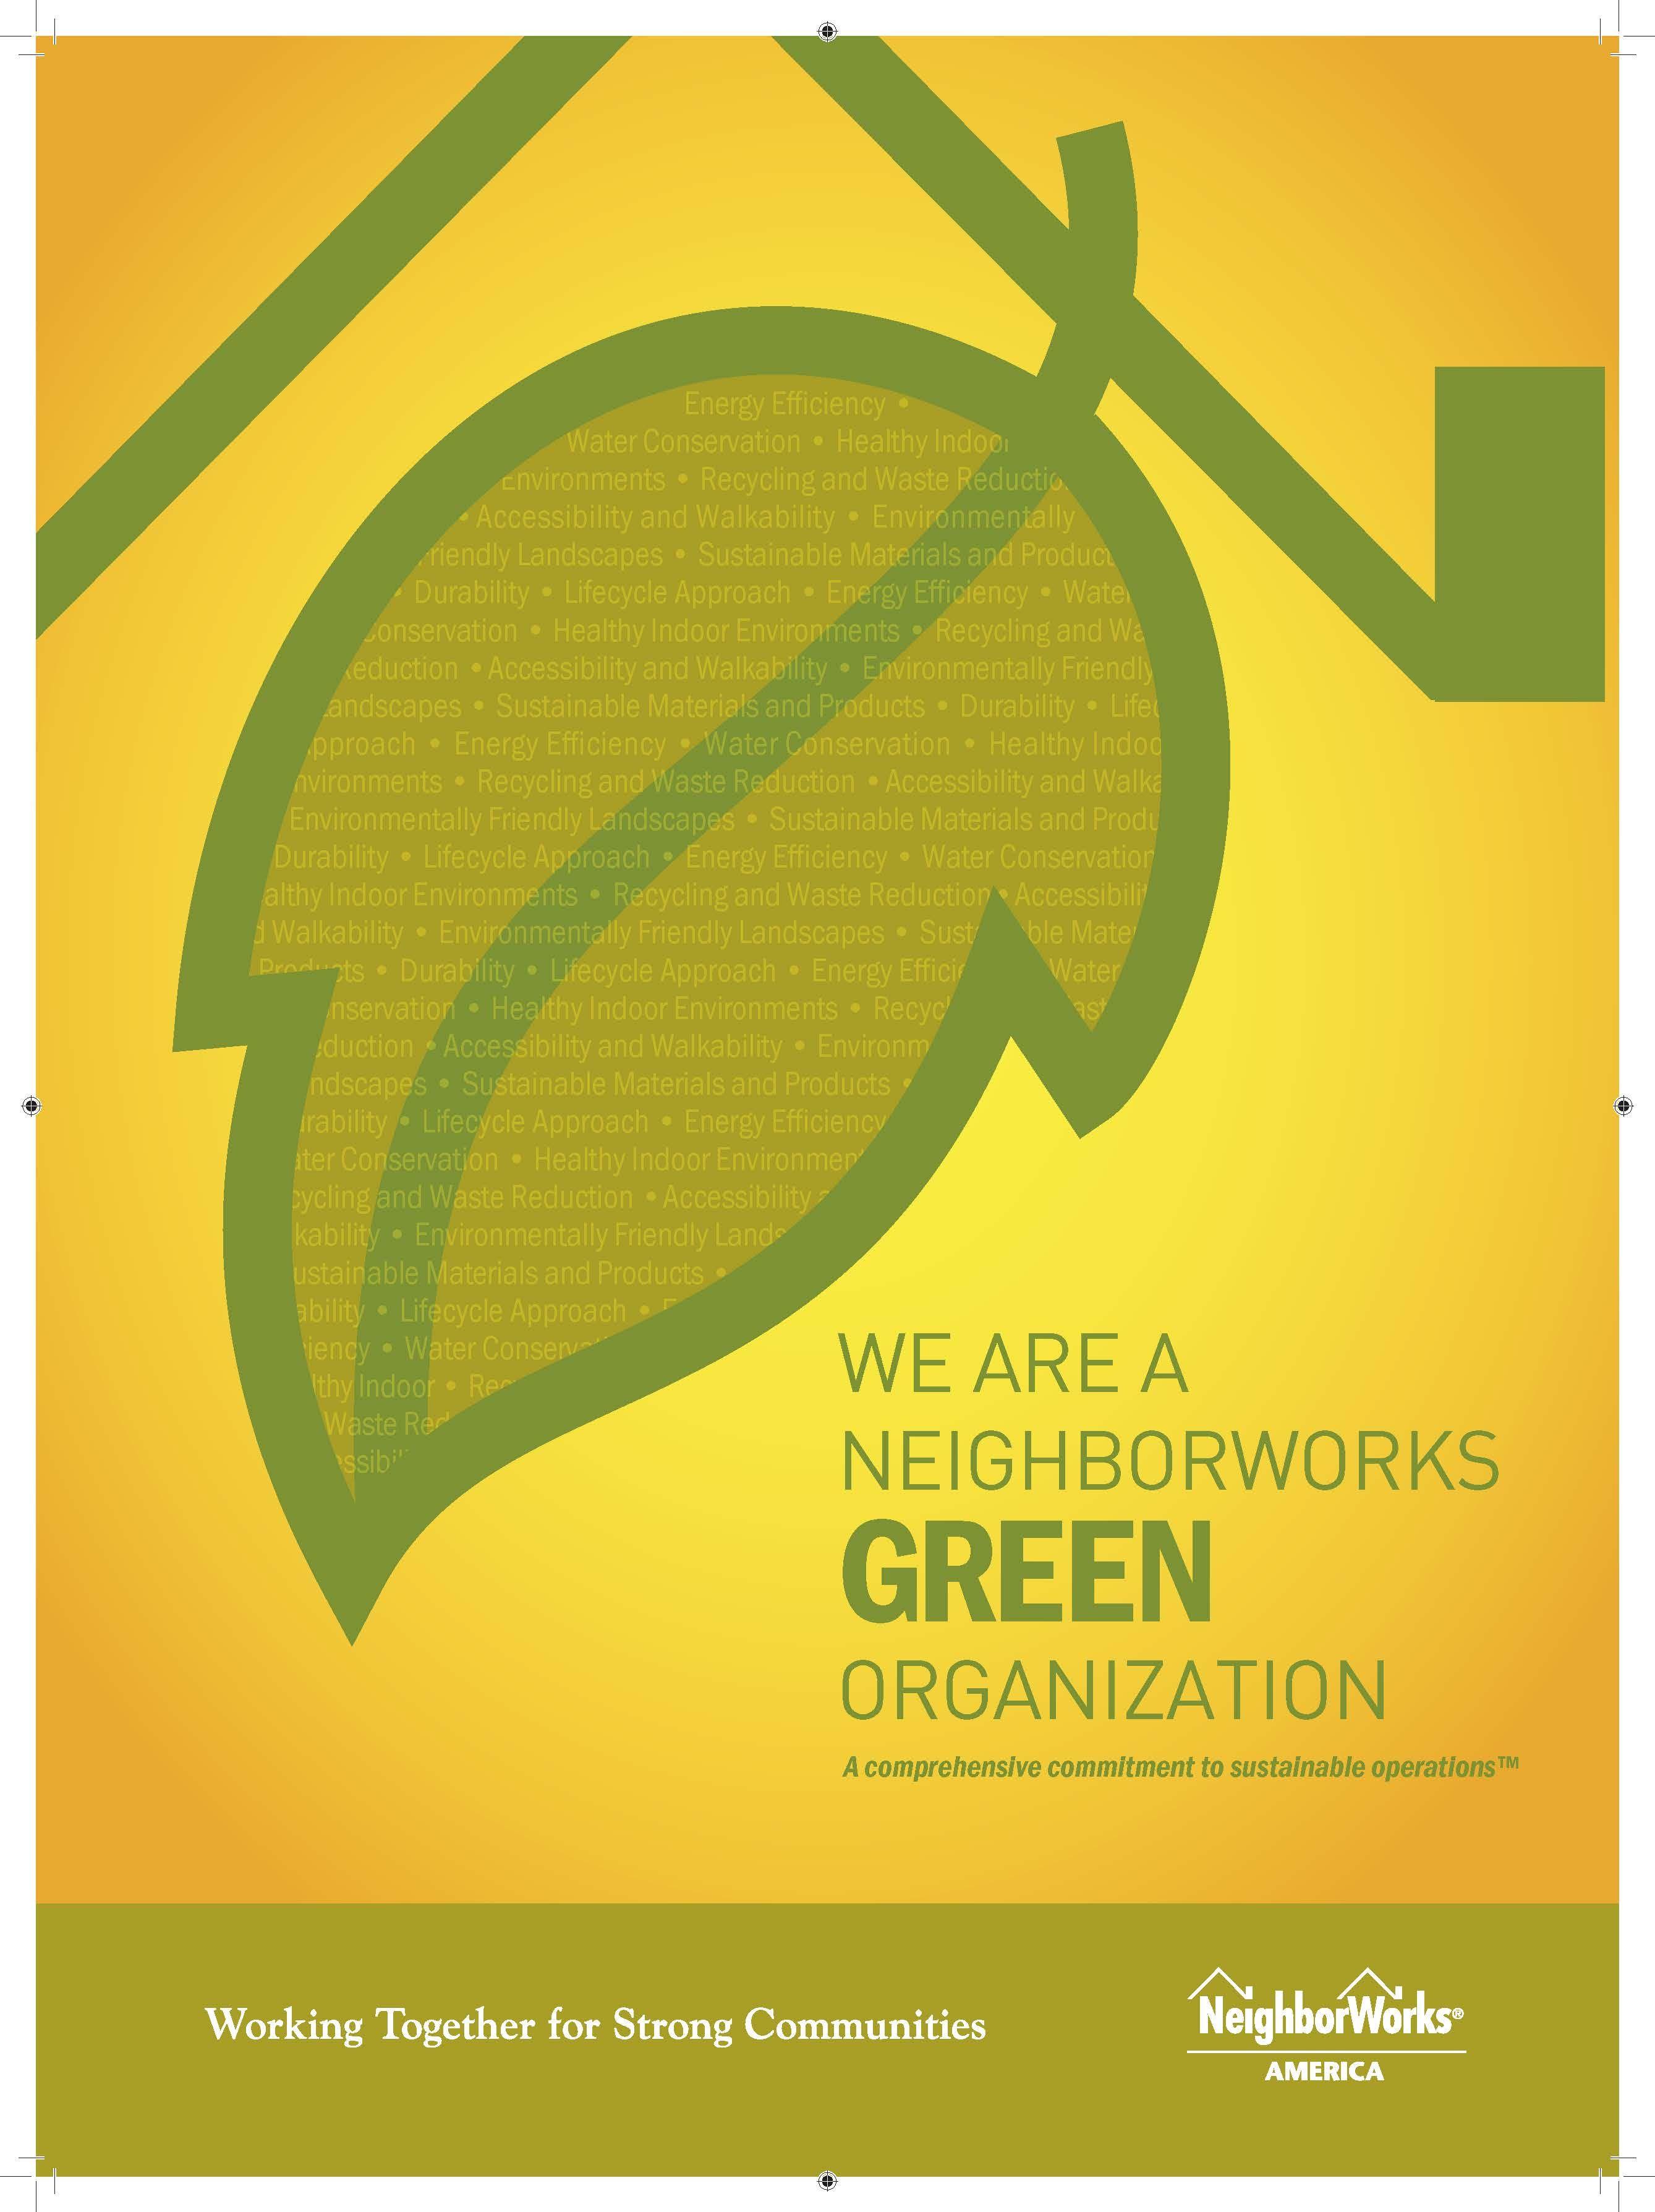 NeighborWorks Green Organization Logo - Southern Mutual Help Association, Inc.